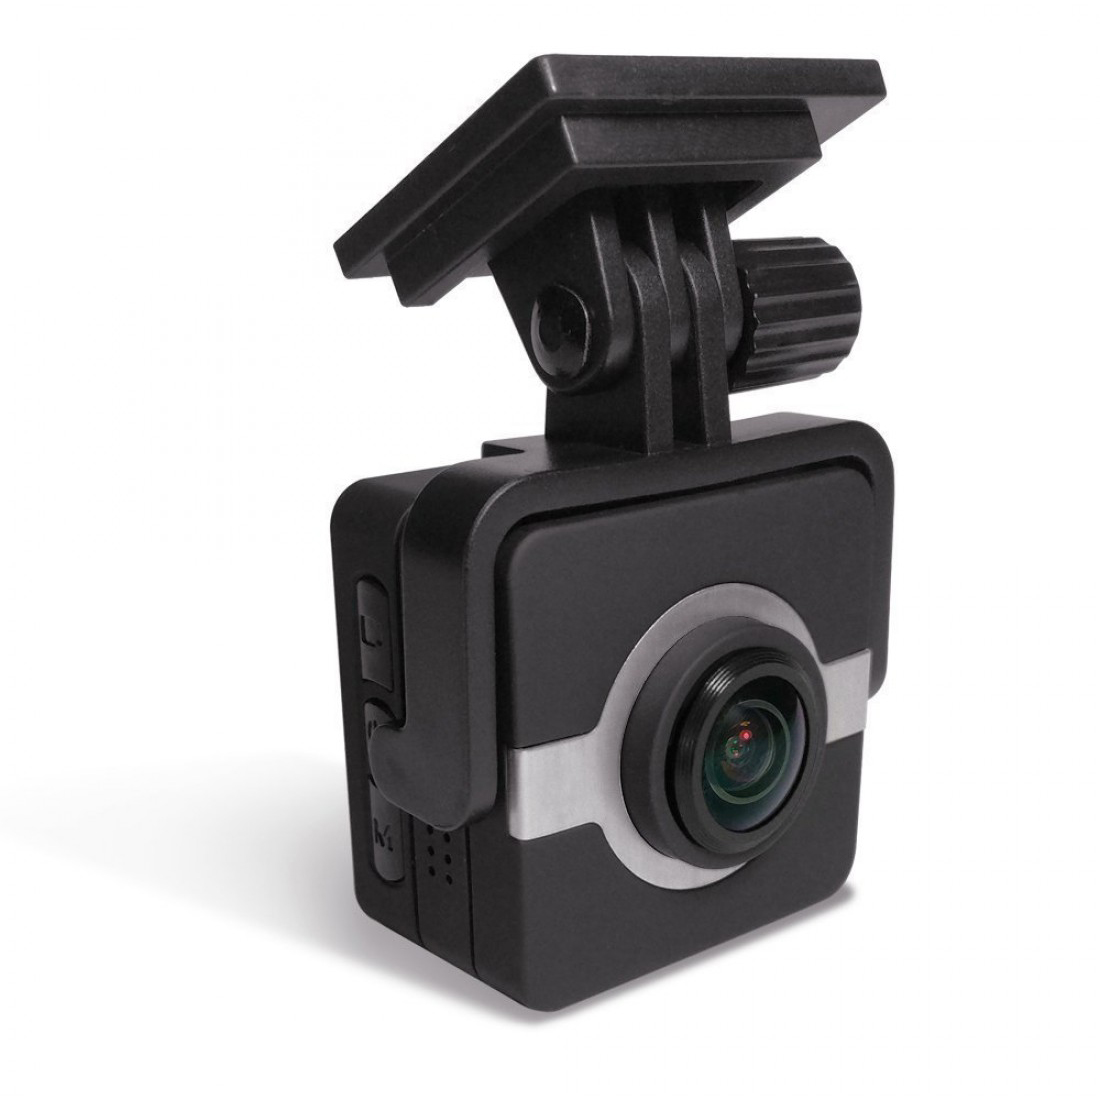 High Quality4K 30FPS ACTION CAMERA- Dash Camera X1 4K WIFI Mini HD 1080p 160 Wide Angle Dashboard Camera Recorder Car Dash Cam with G-Sensor Loop Recording Car DVR (Car DVR- Pro Edition Silver) – MATECAM